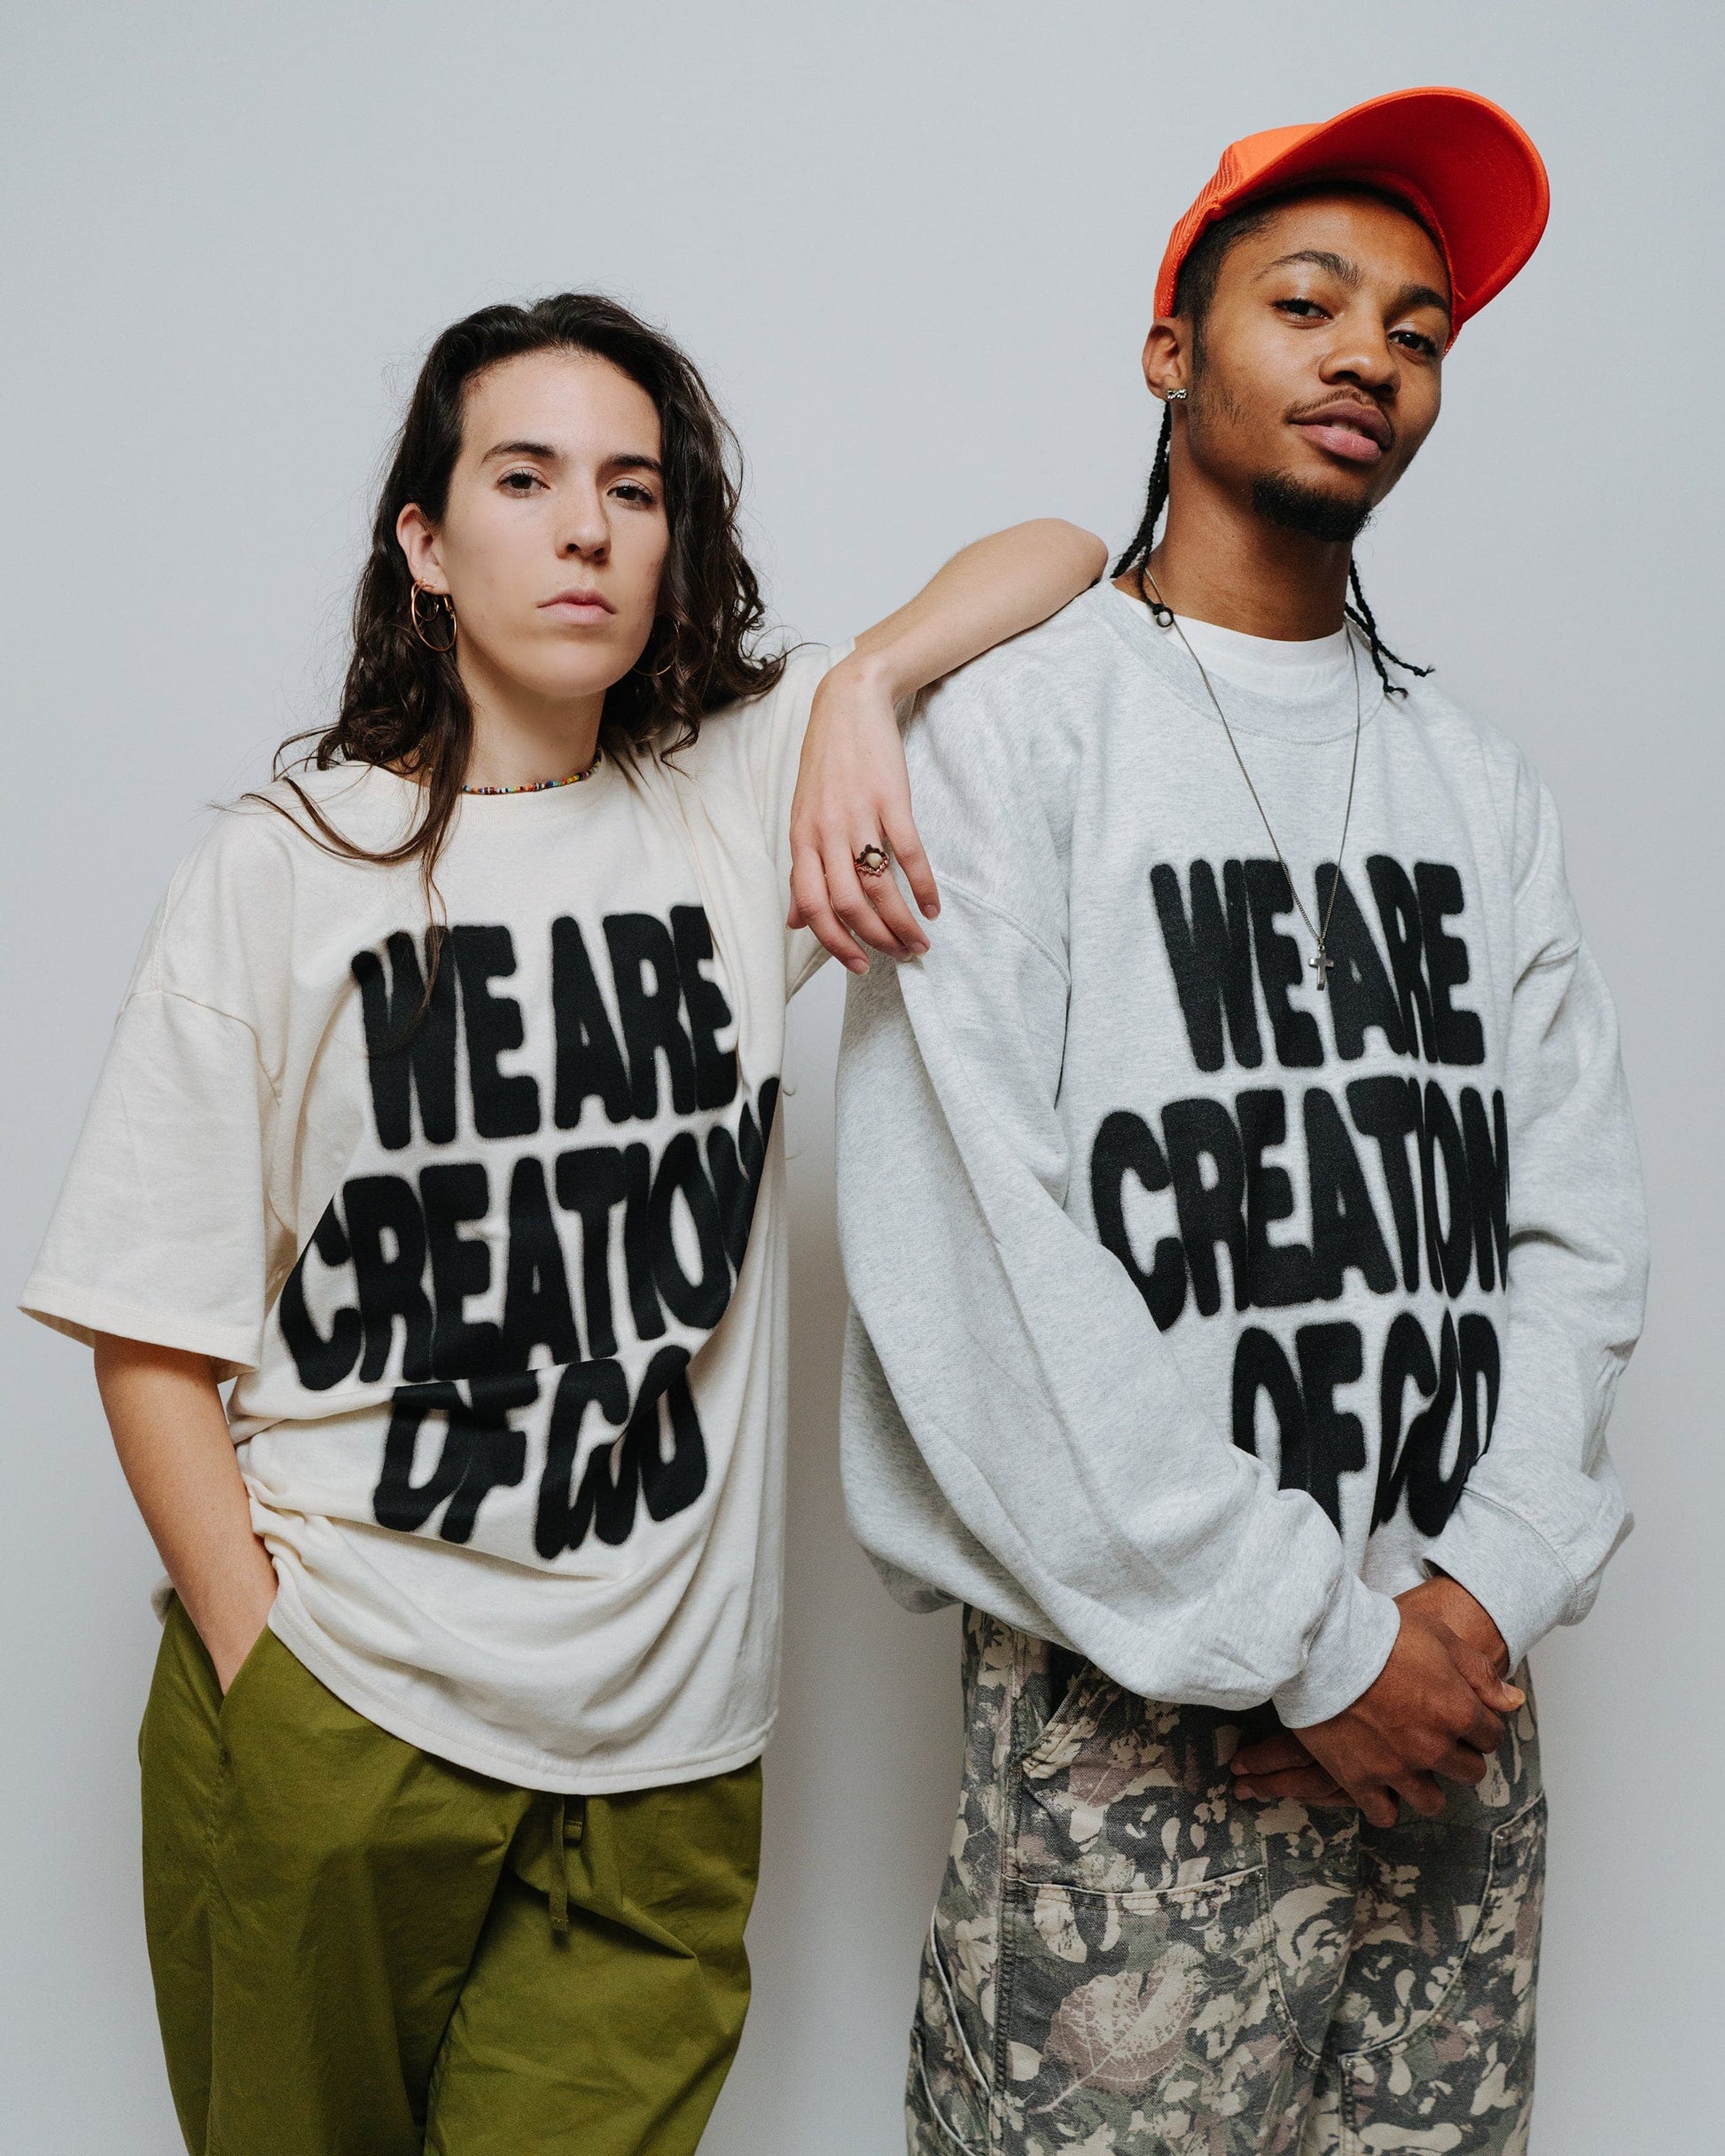 WE ARE CREATIONS OF GOD ash crewneck sweatshirt by NHIM Apparel Christian clothing brand